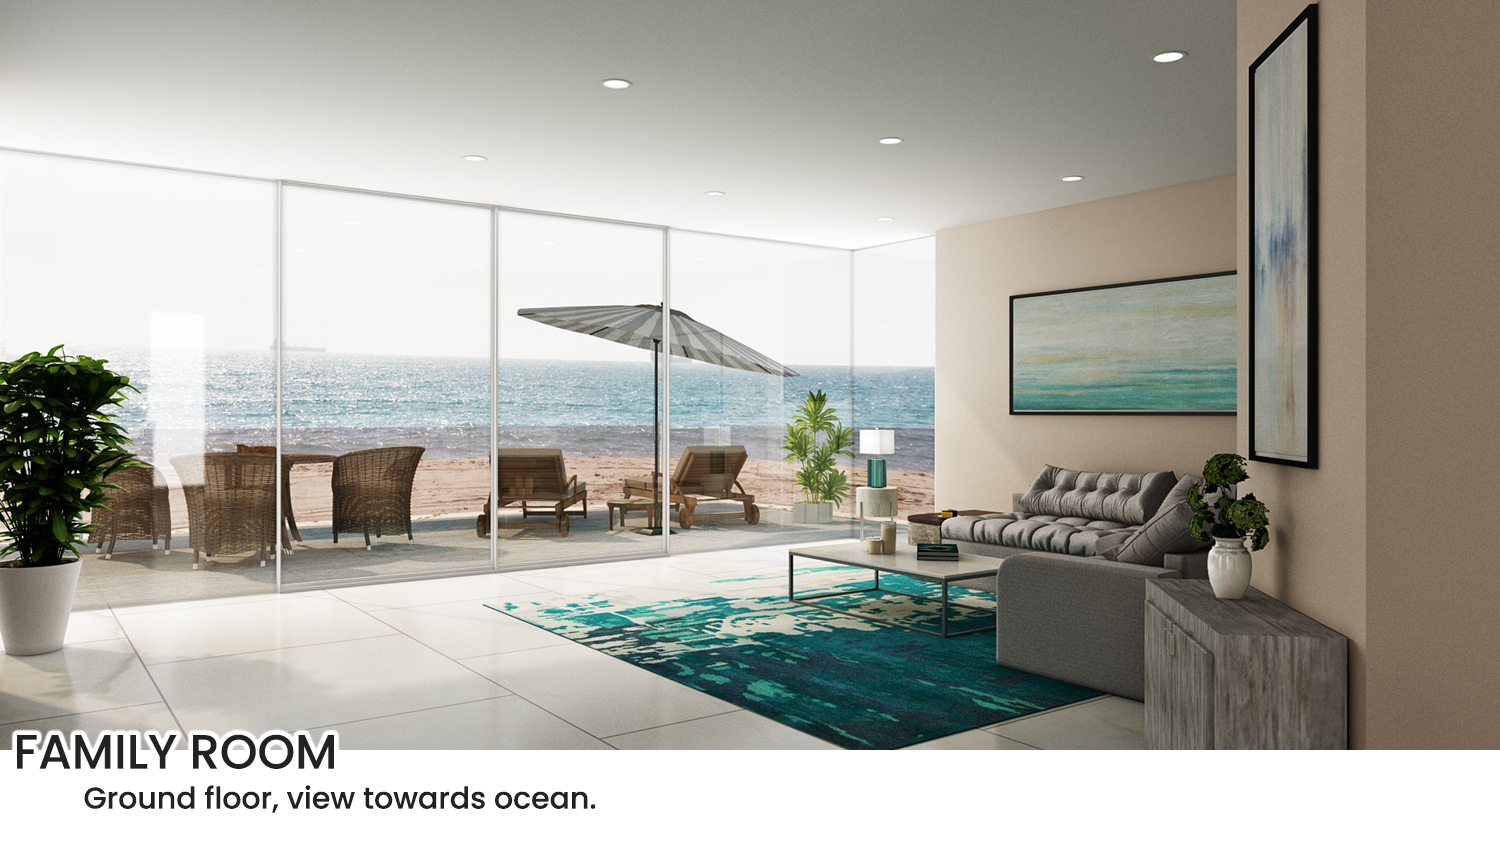 Ground floor - Family Room - view toward the ocean